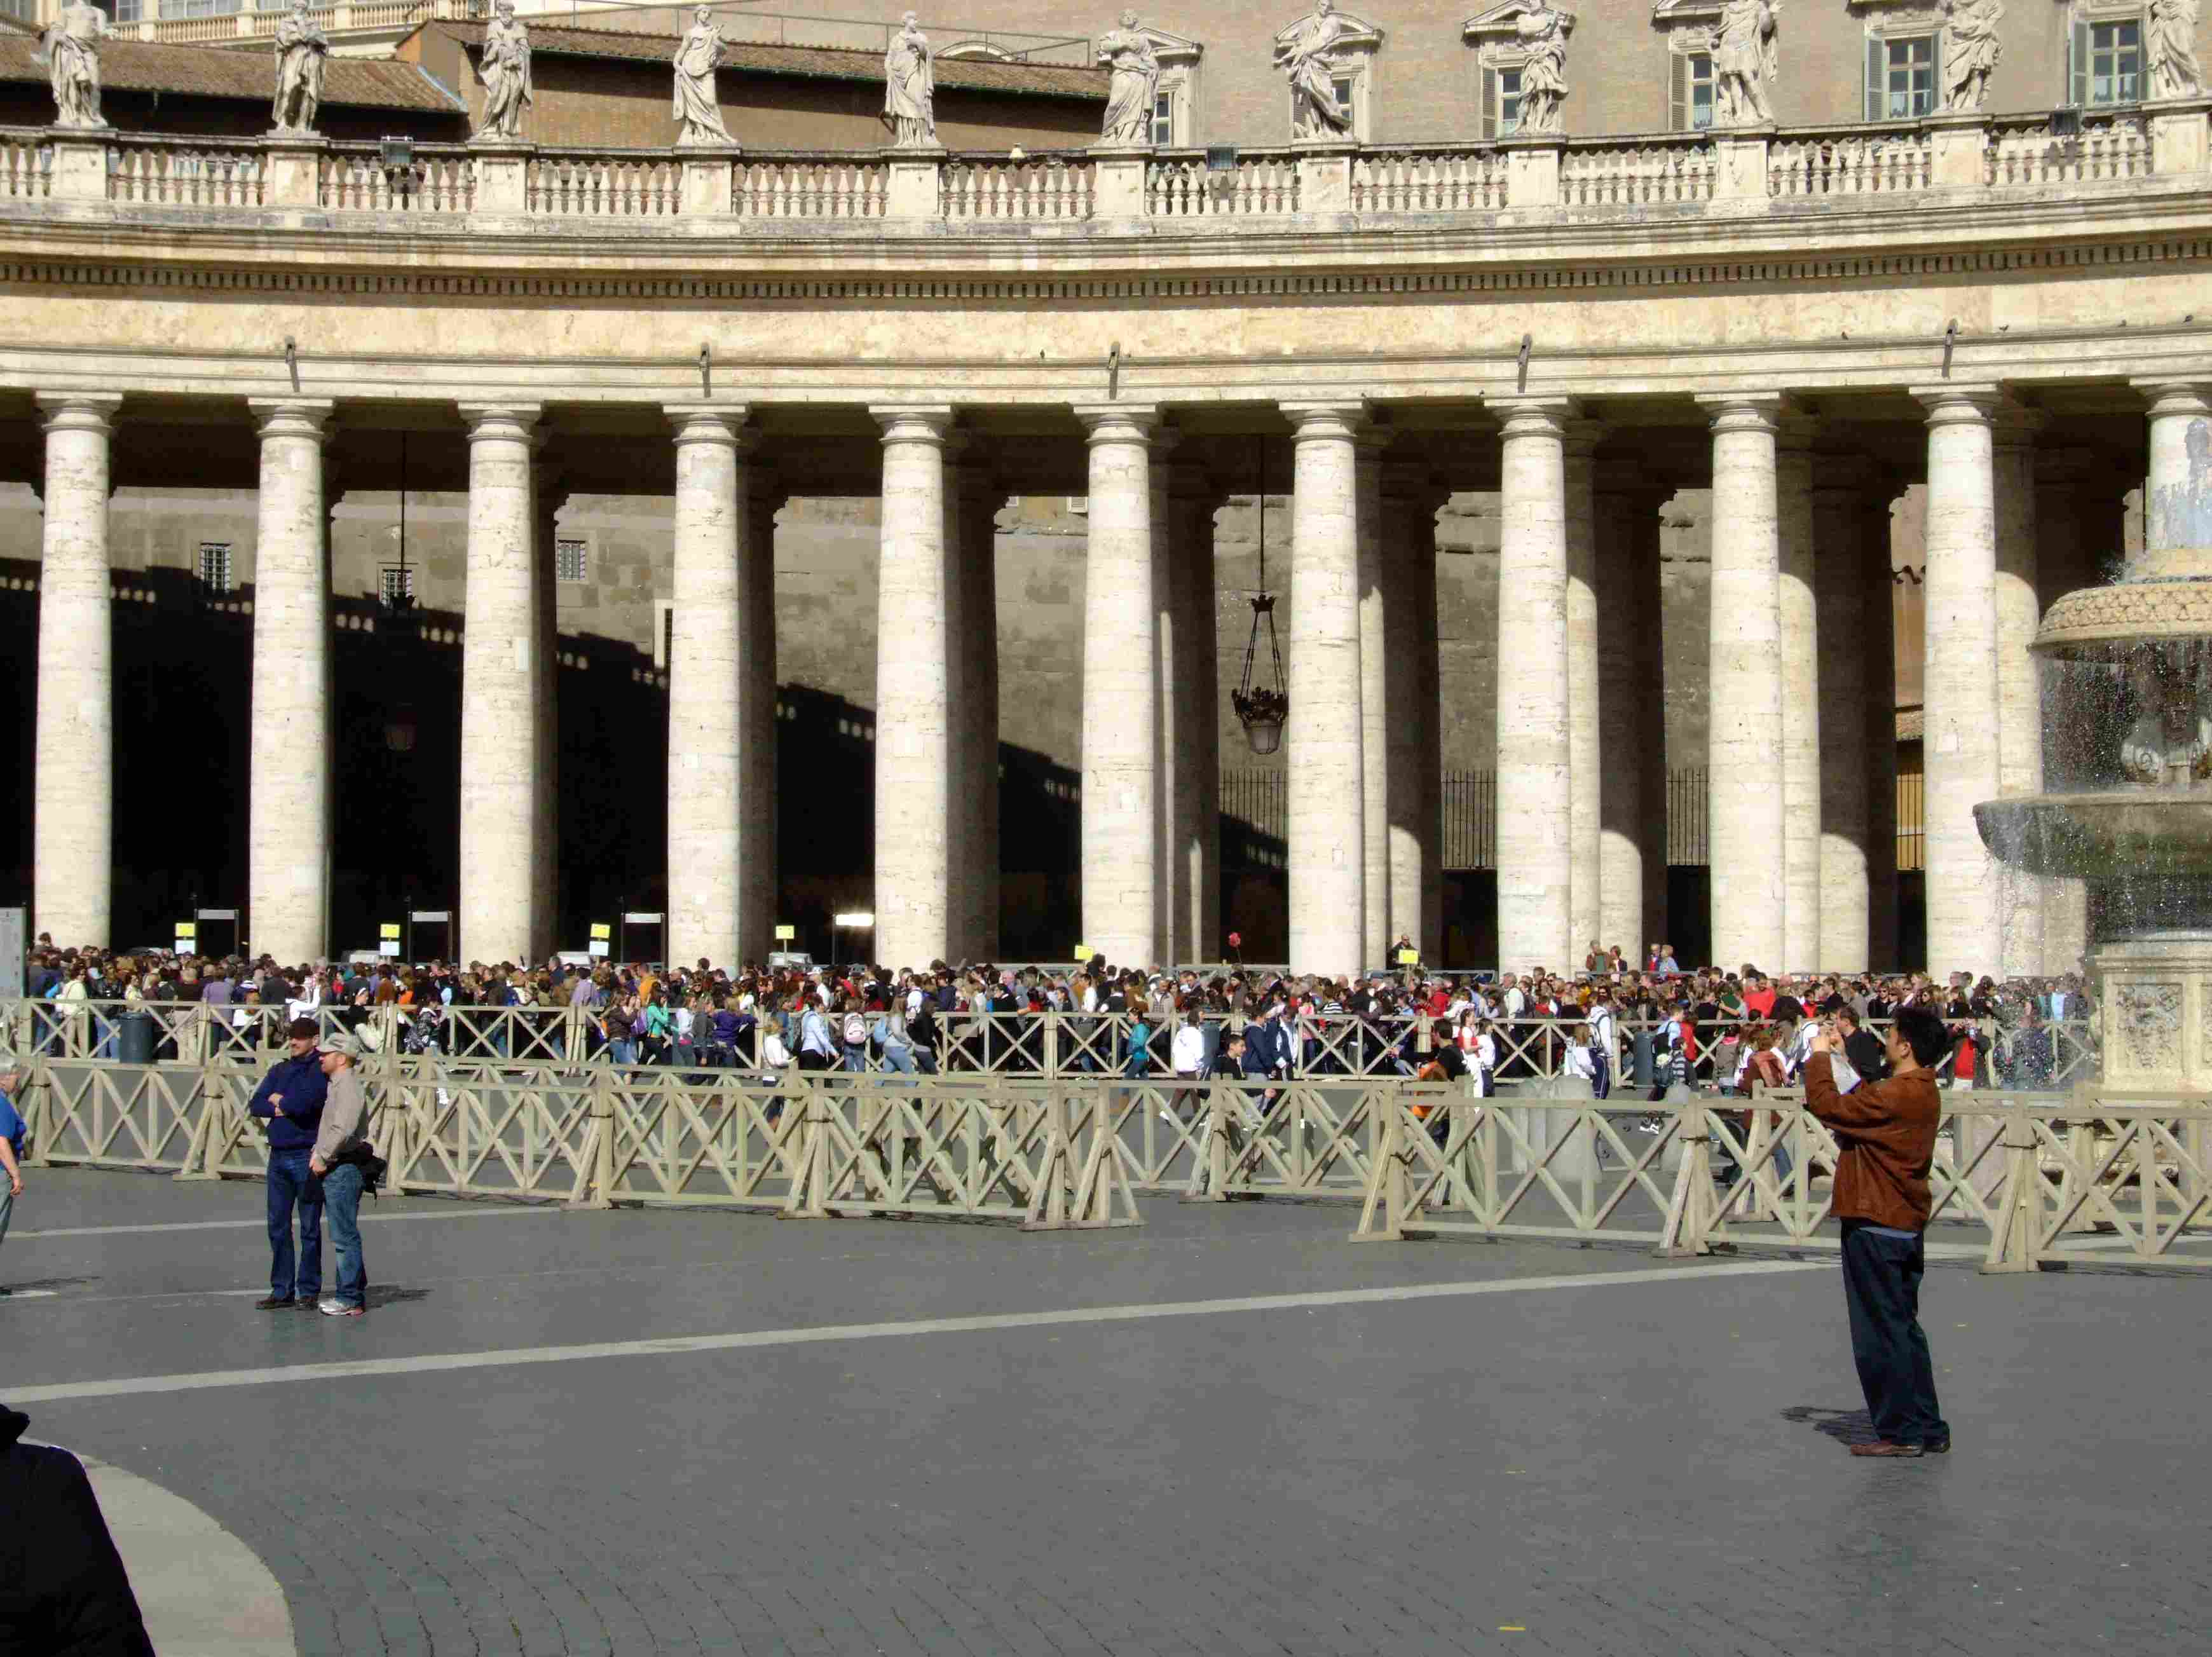 Piazza San Pietro